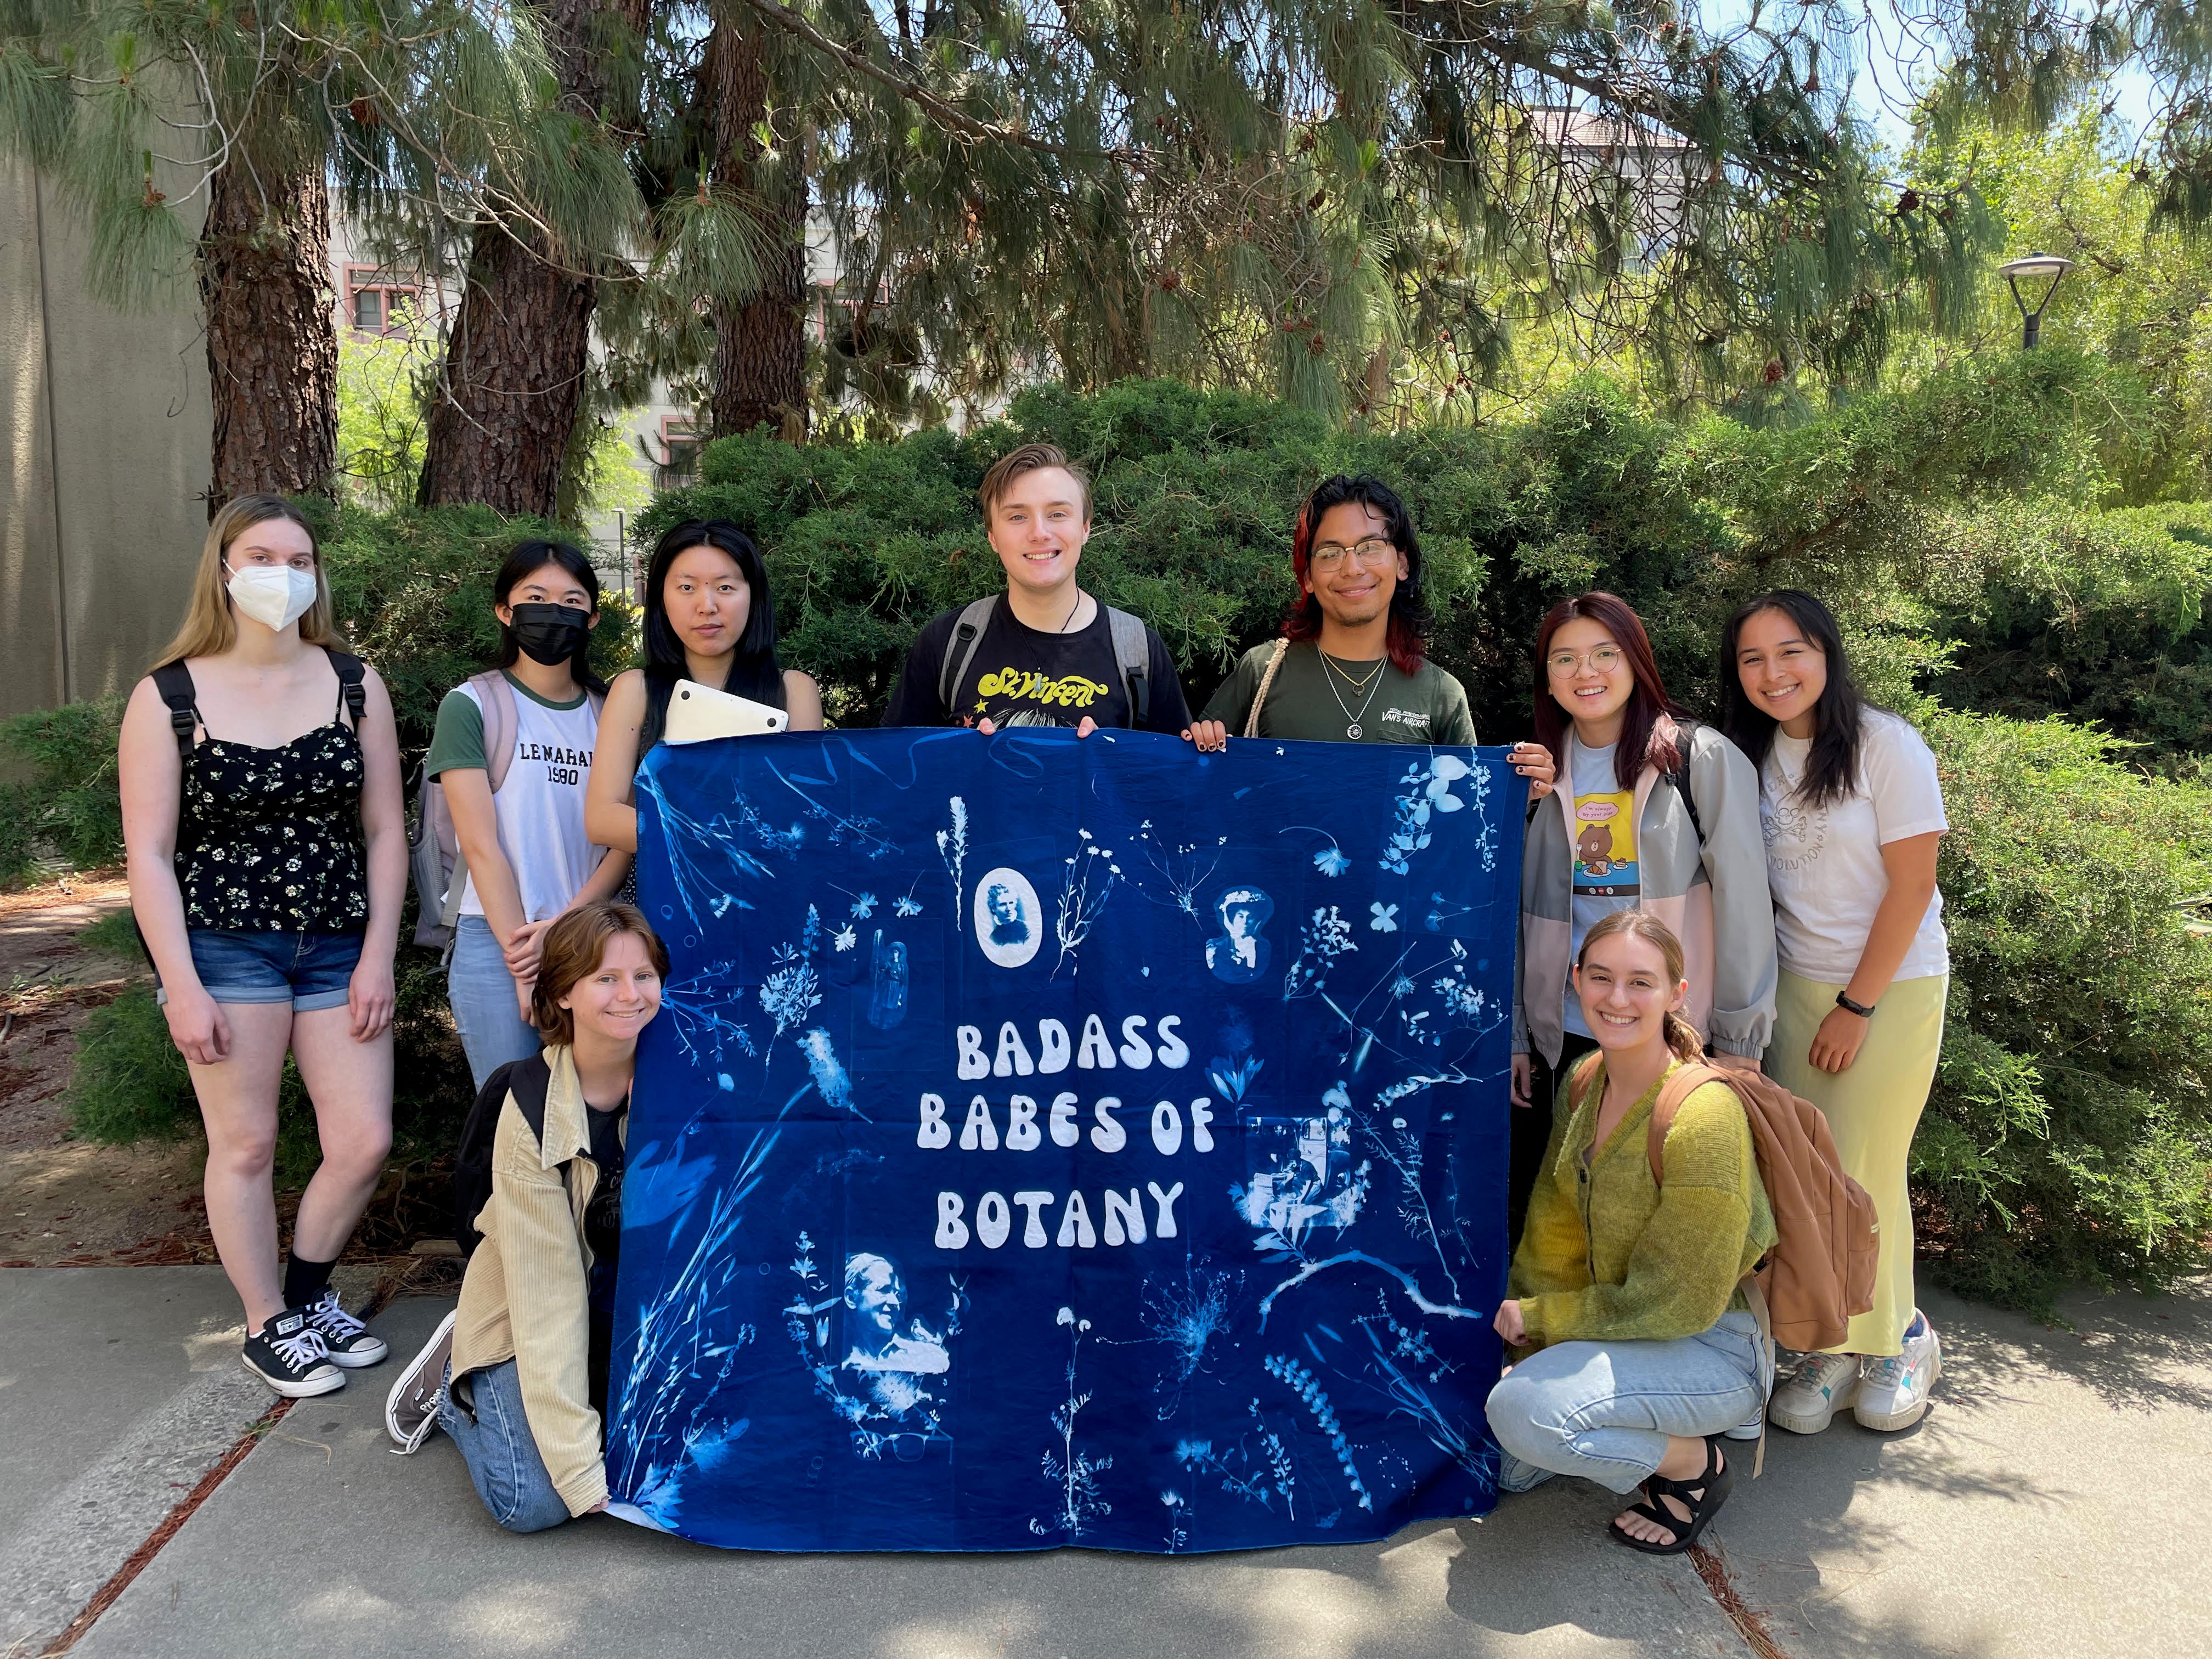 Undergraduates pose with a large fabric poster reading "Badass Babes of Botany"